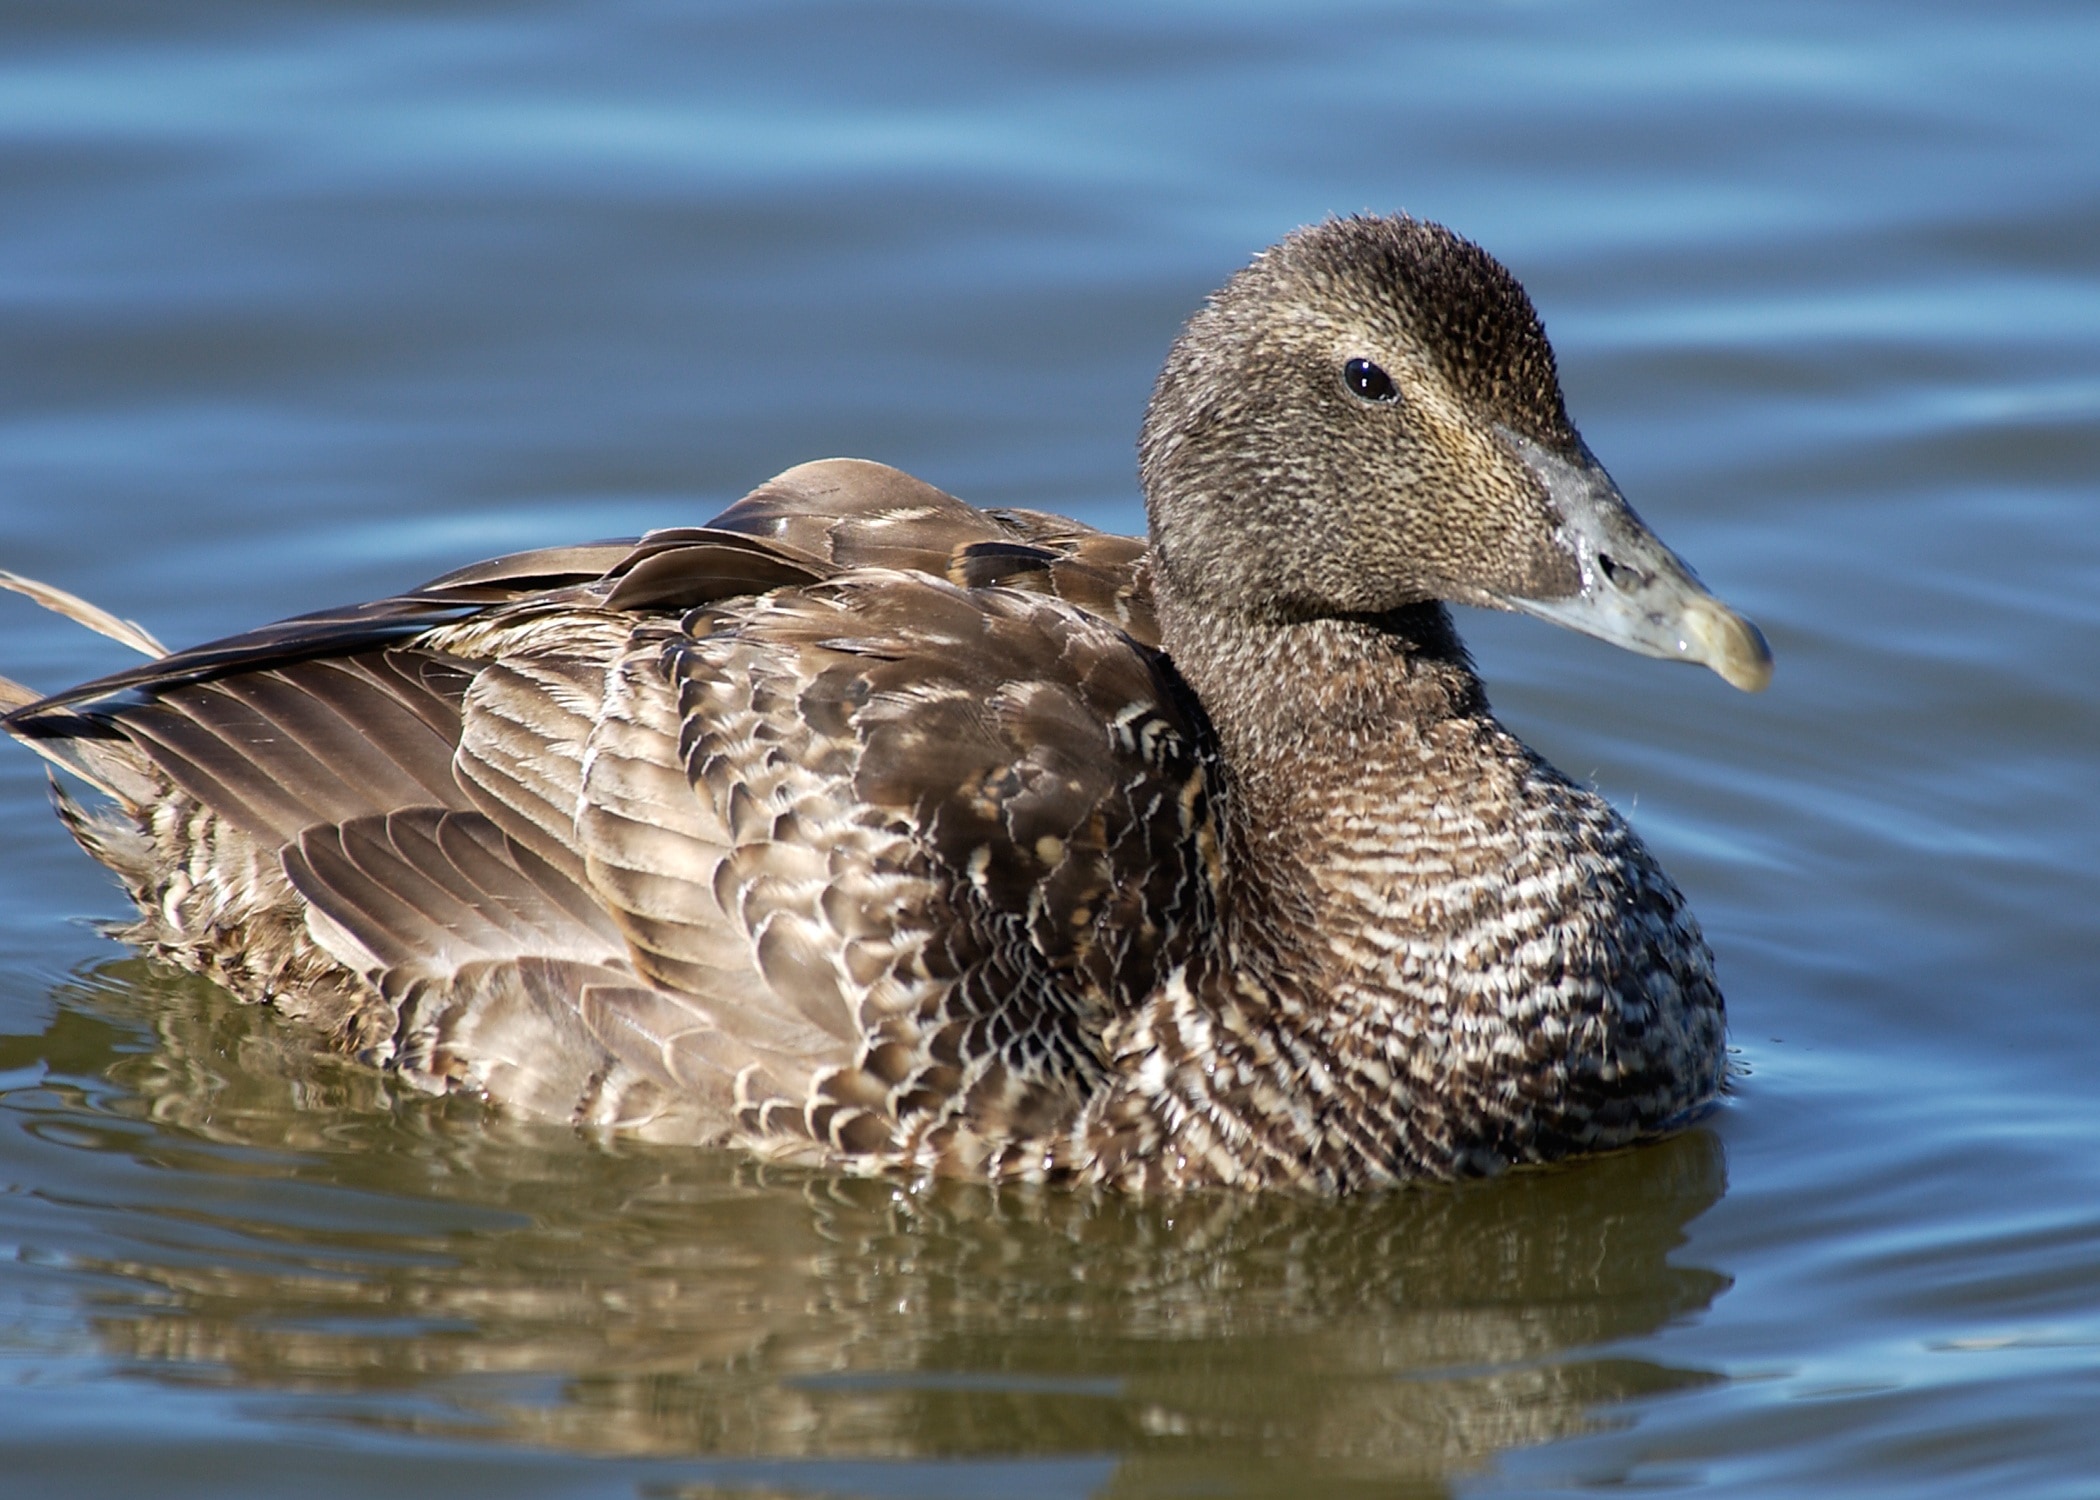 female mallard duck on body of water during daytime